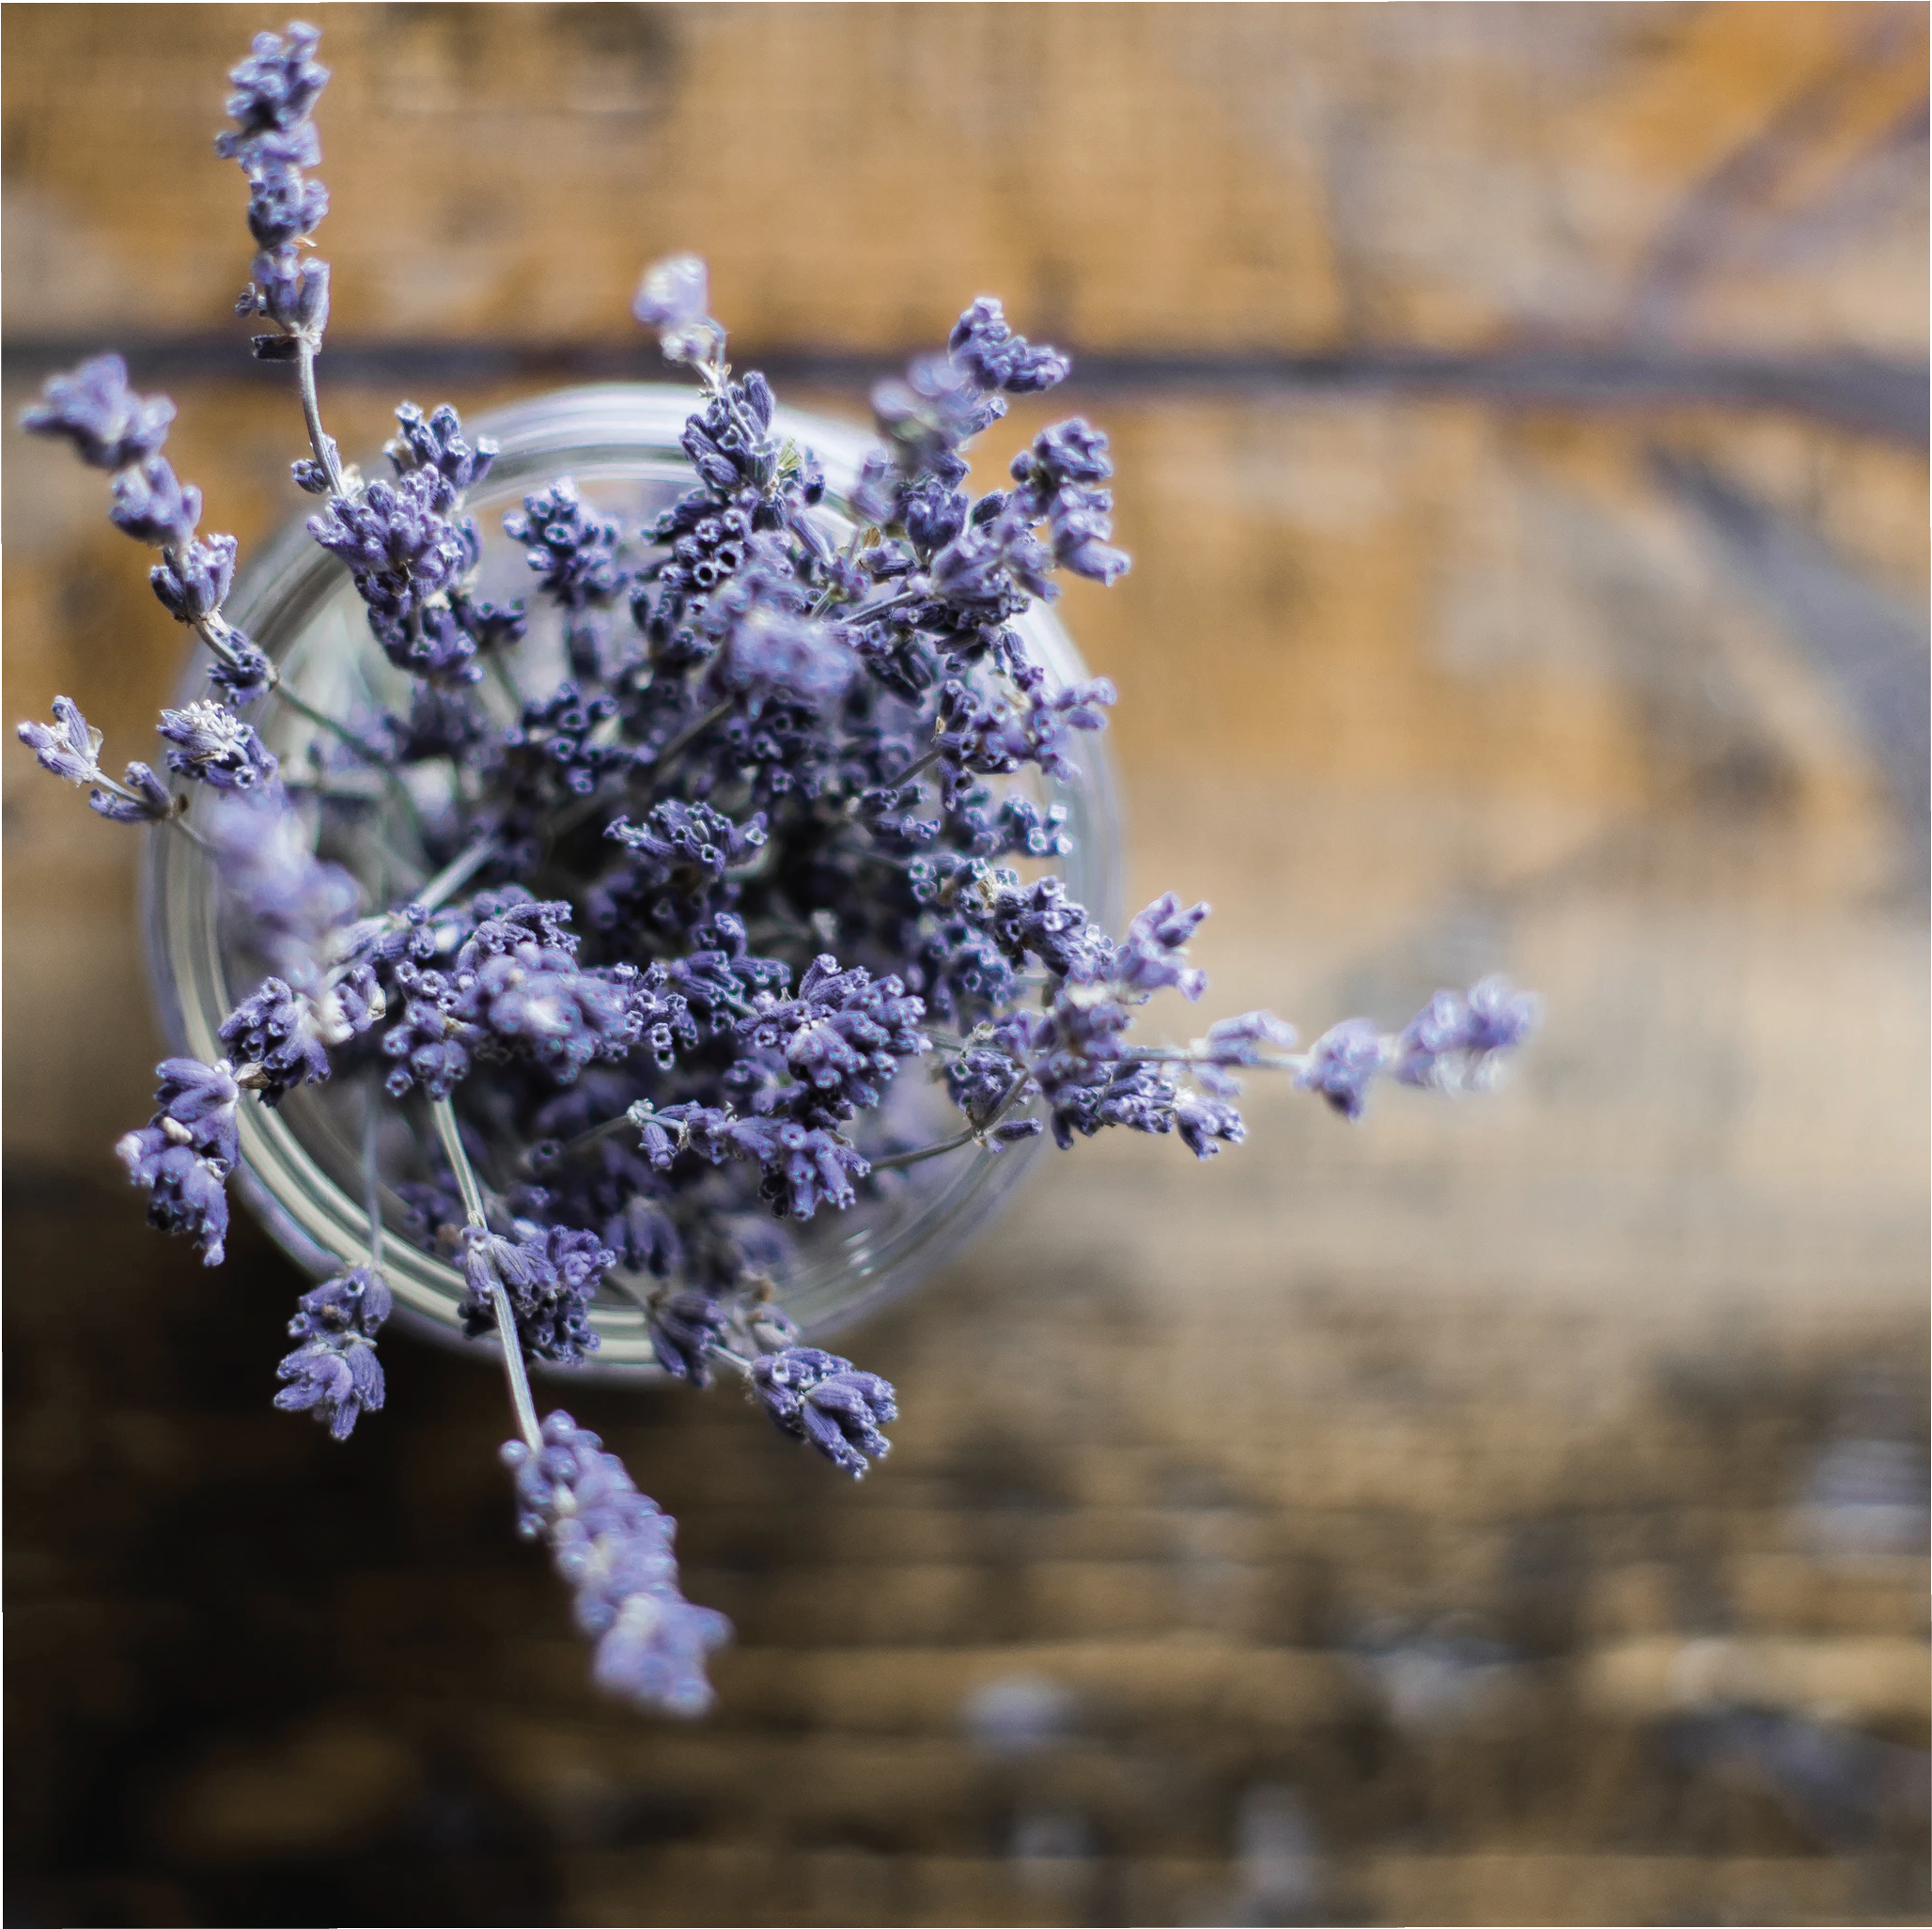 Lavender Cade Wood floral woody fragrance oil